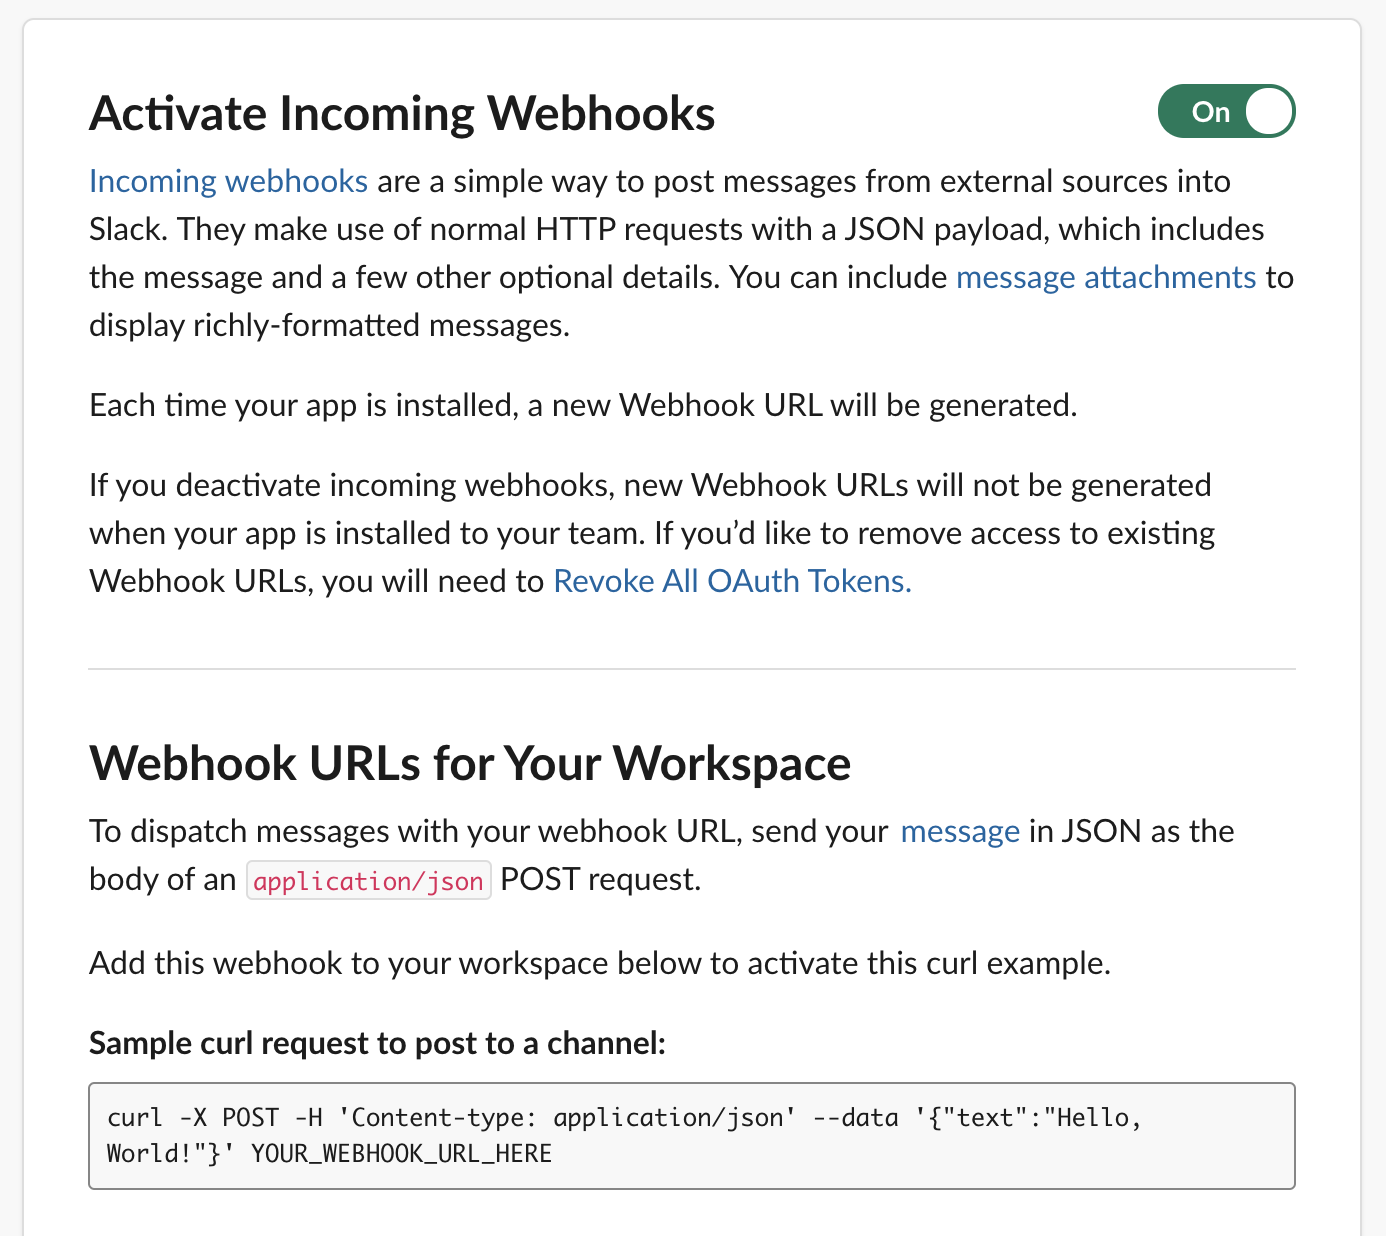 Slack app - Activate Incoming Webhooks